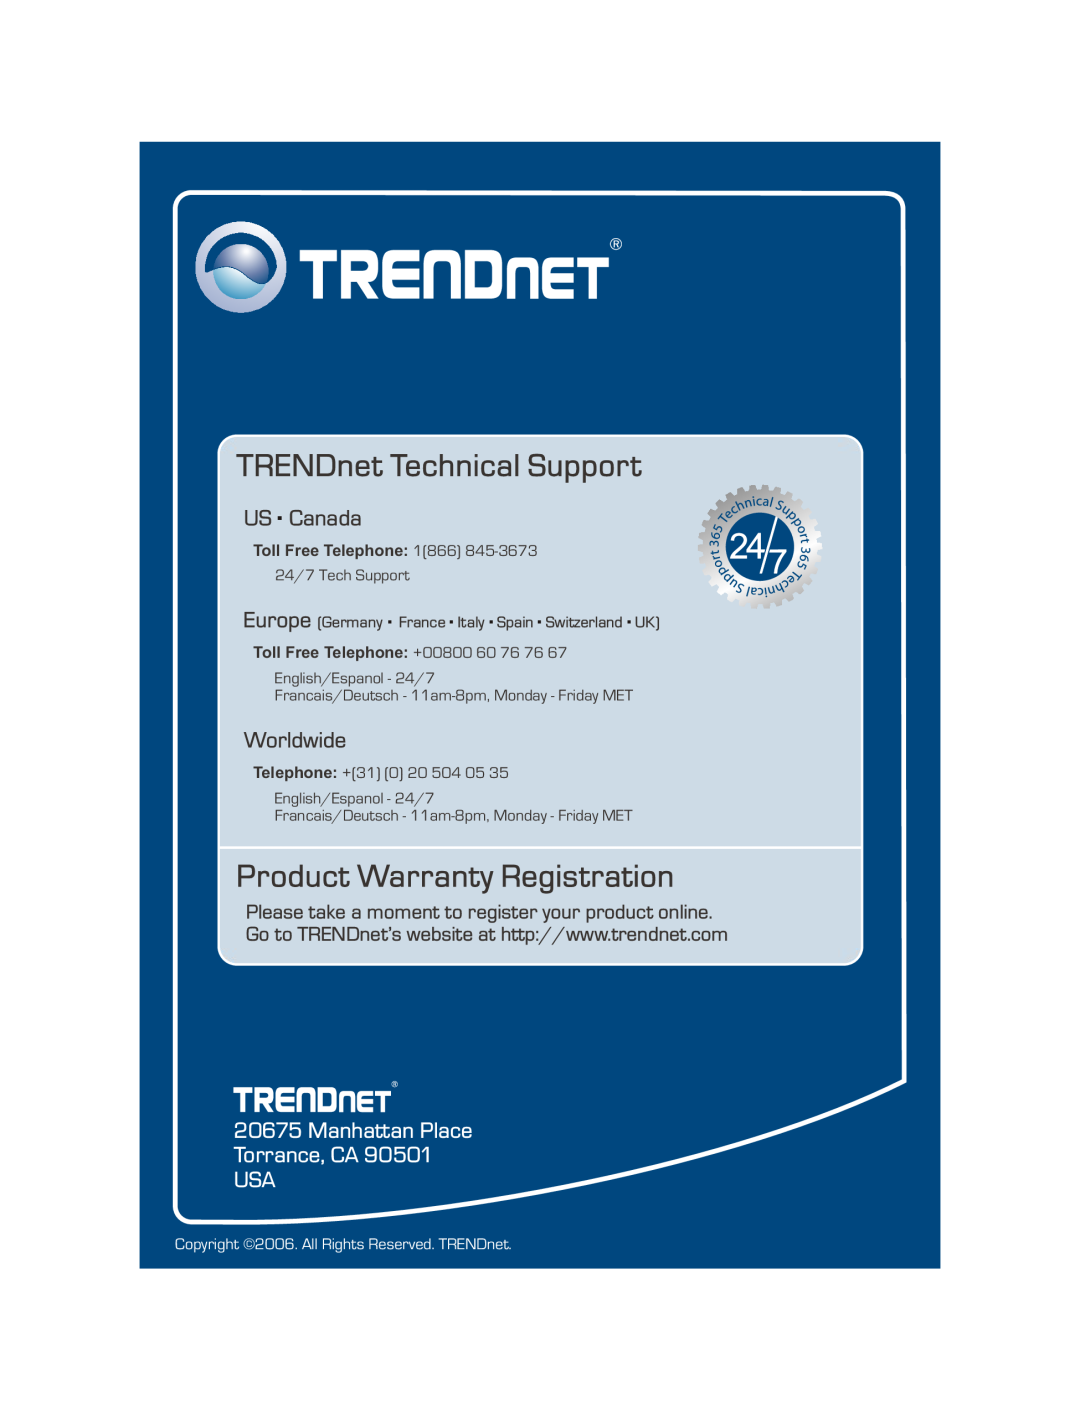 TRENDnet TK-401R TRENDnet Technical Support, Product Warranty Registration, US . Canada, Worldwide, Toll Free Telephone 